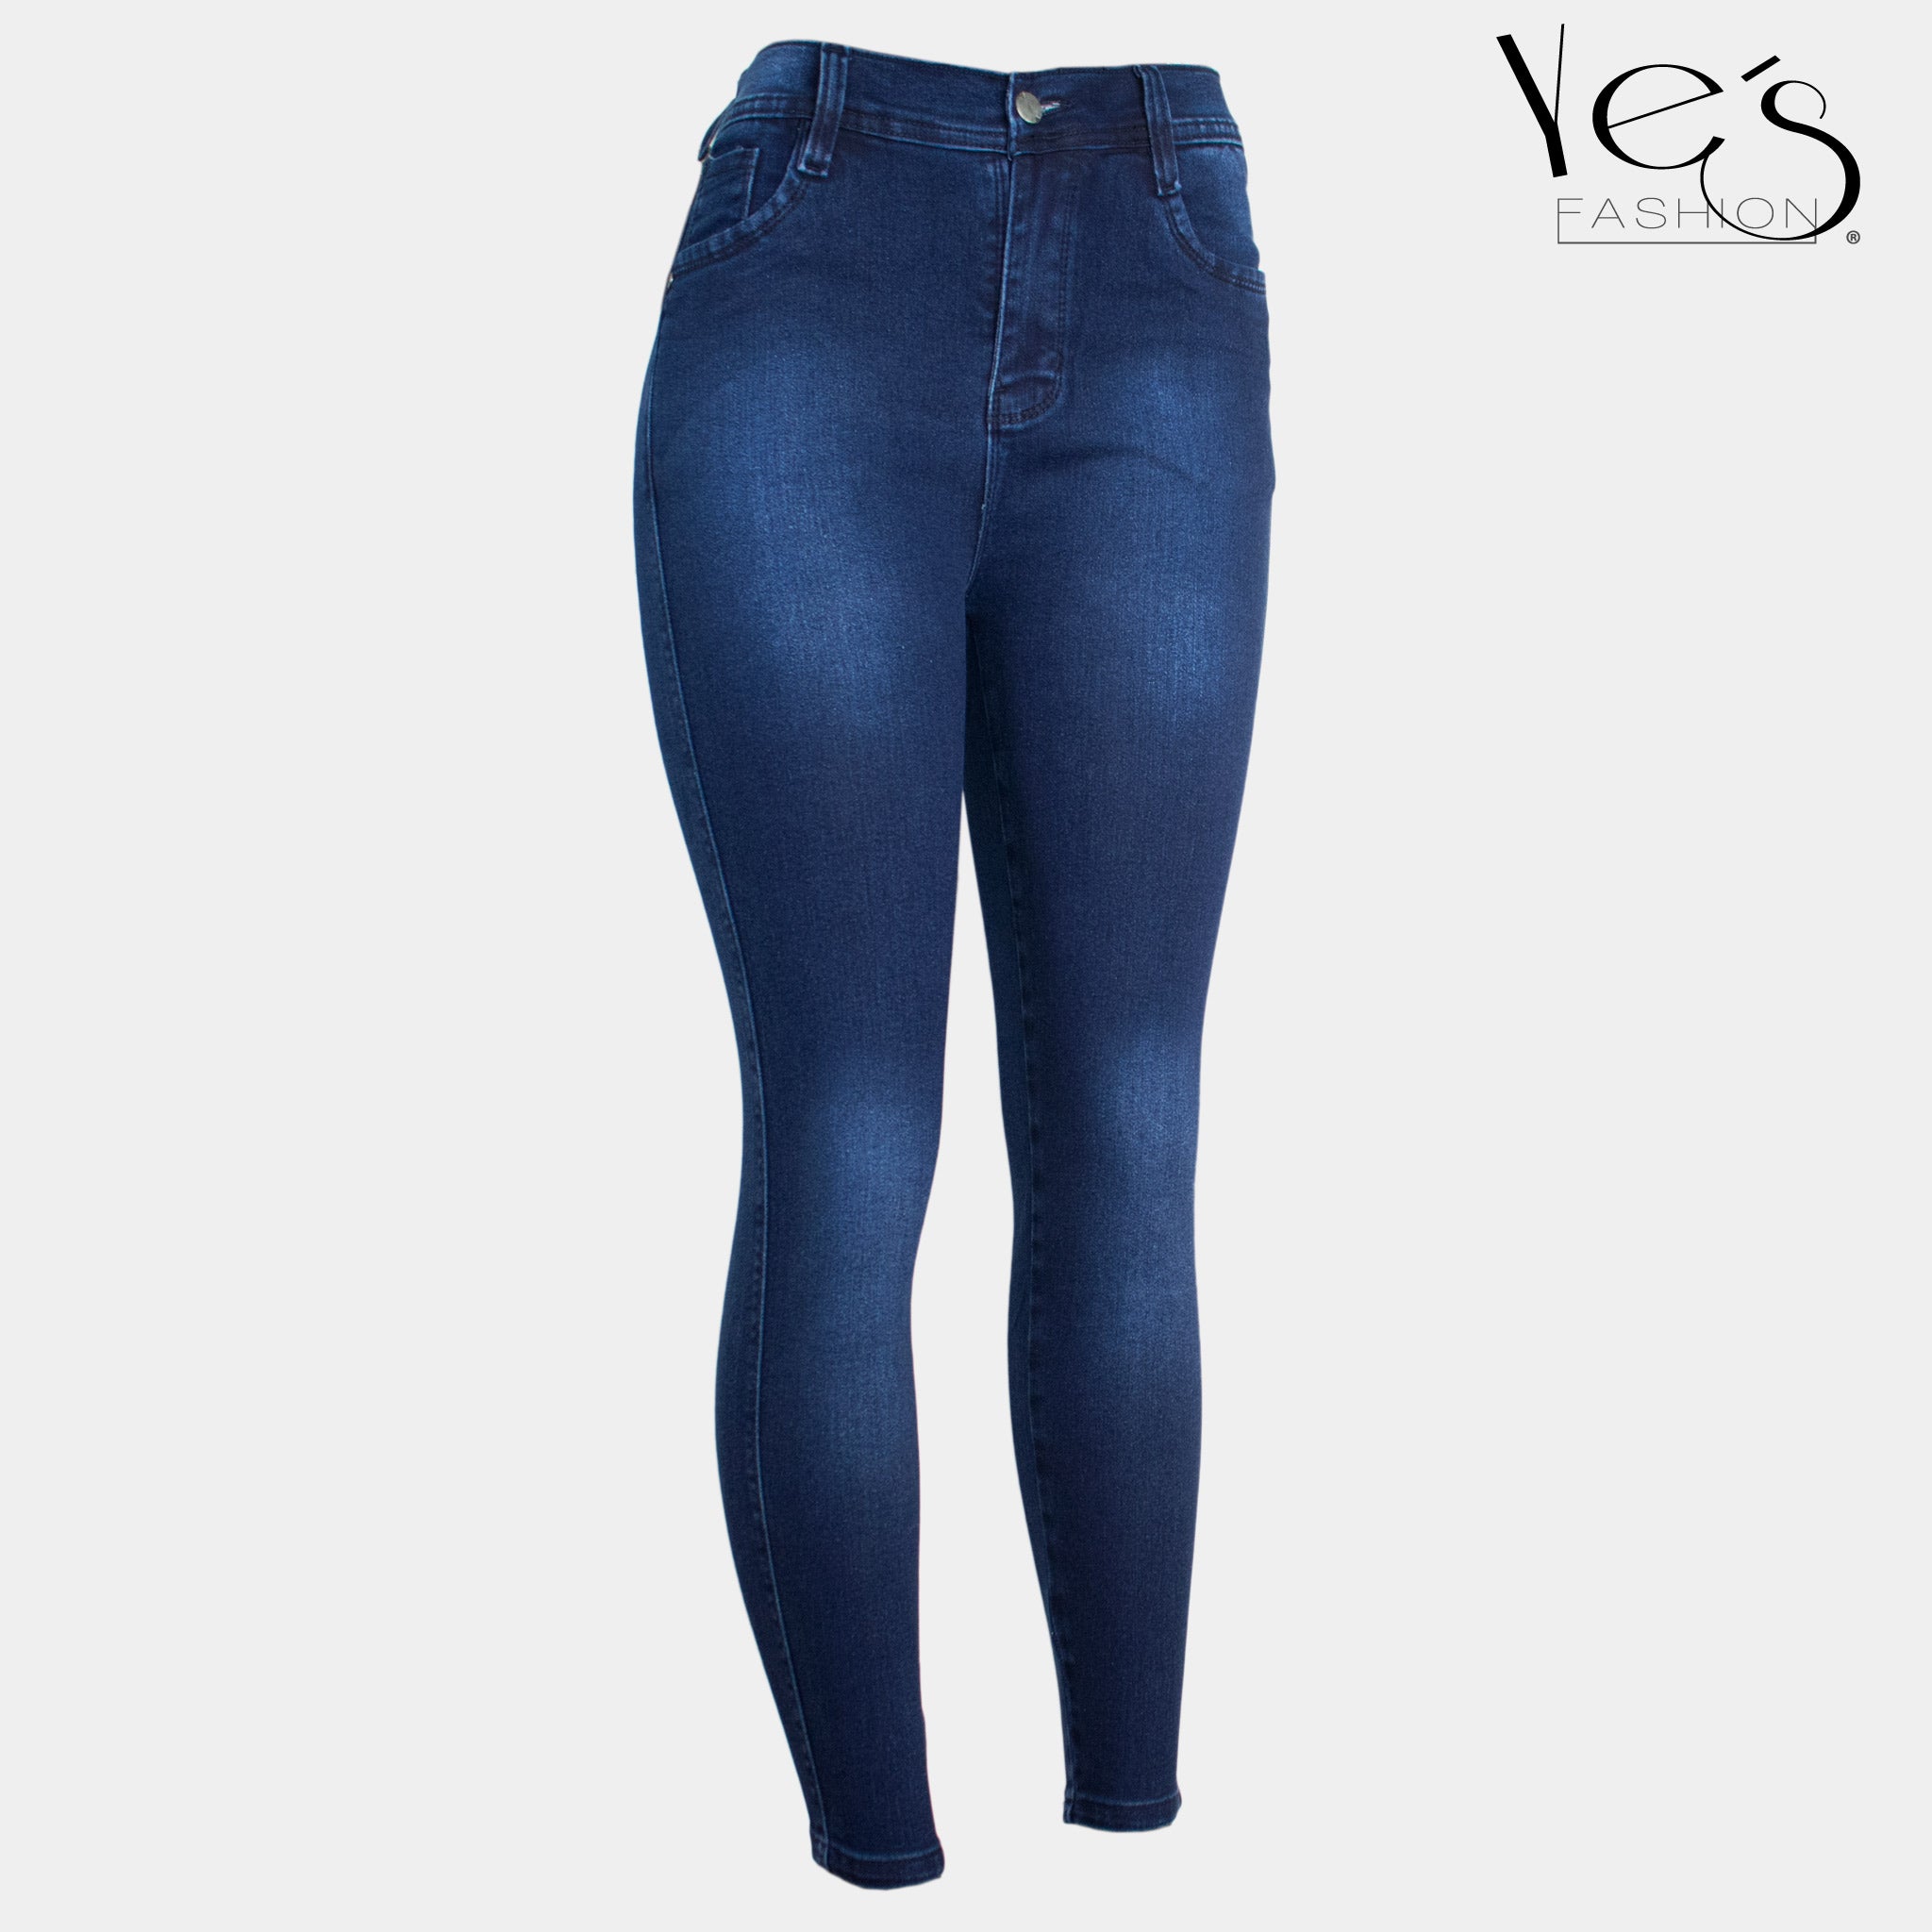 Jeans Clásicos Skinny para Mujer  - Color: Azul Oscuro (NewClassic)